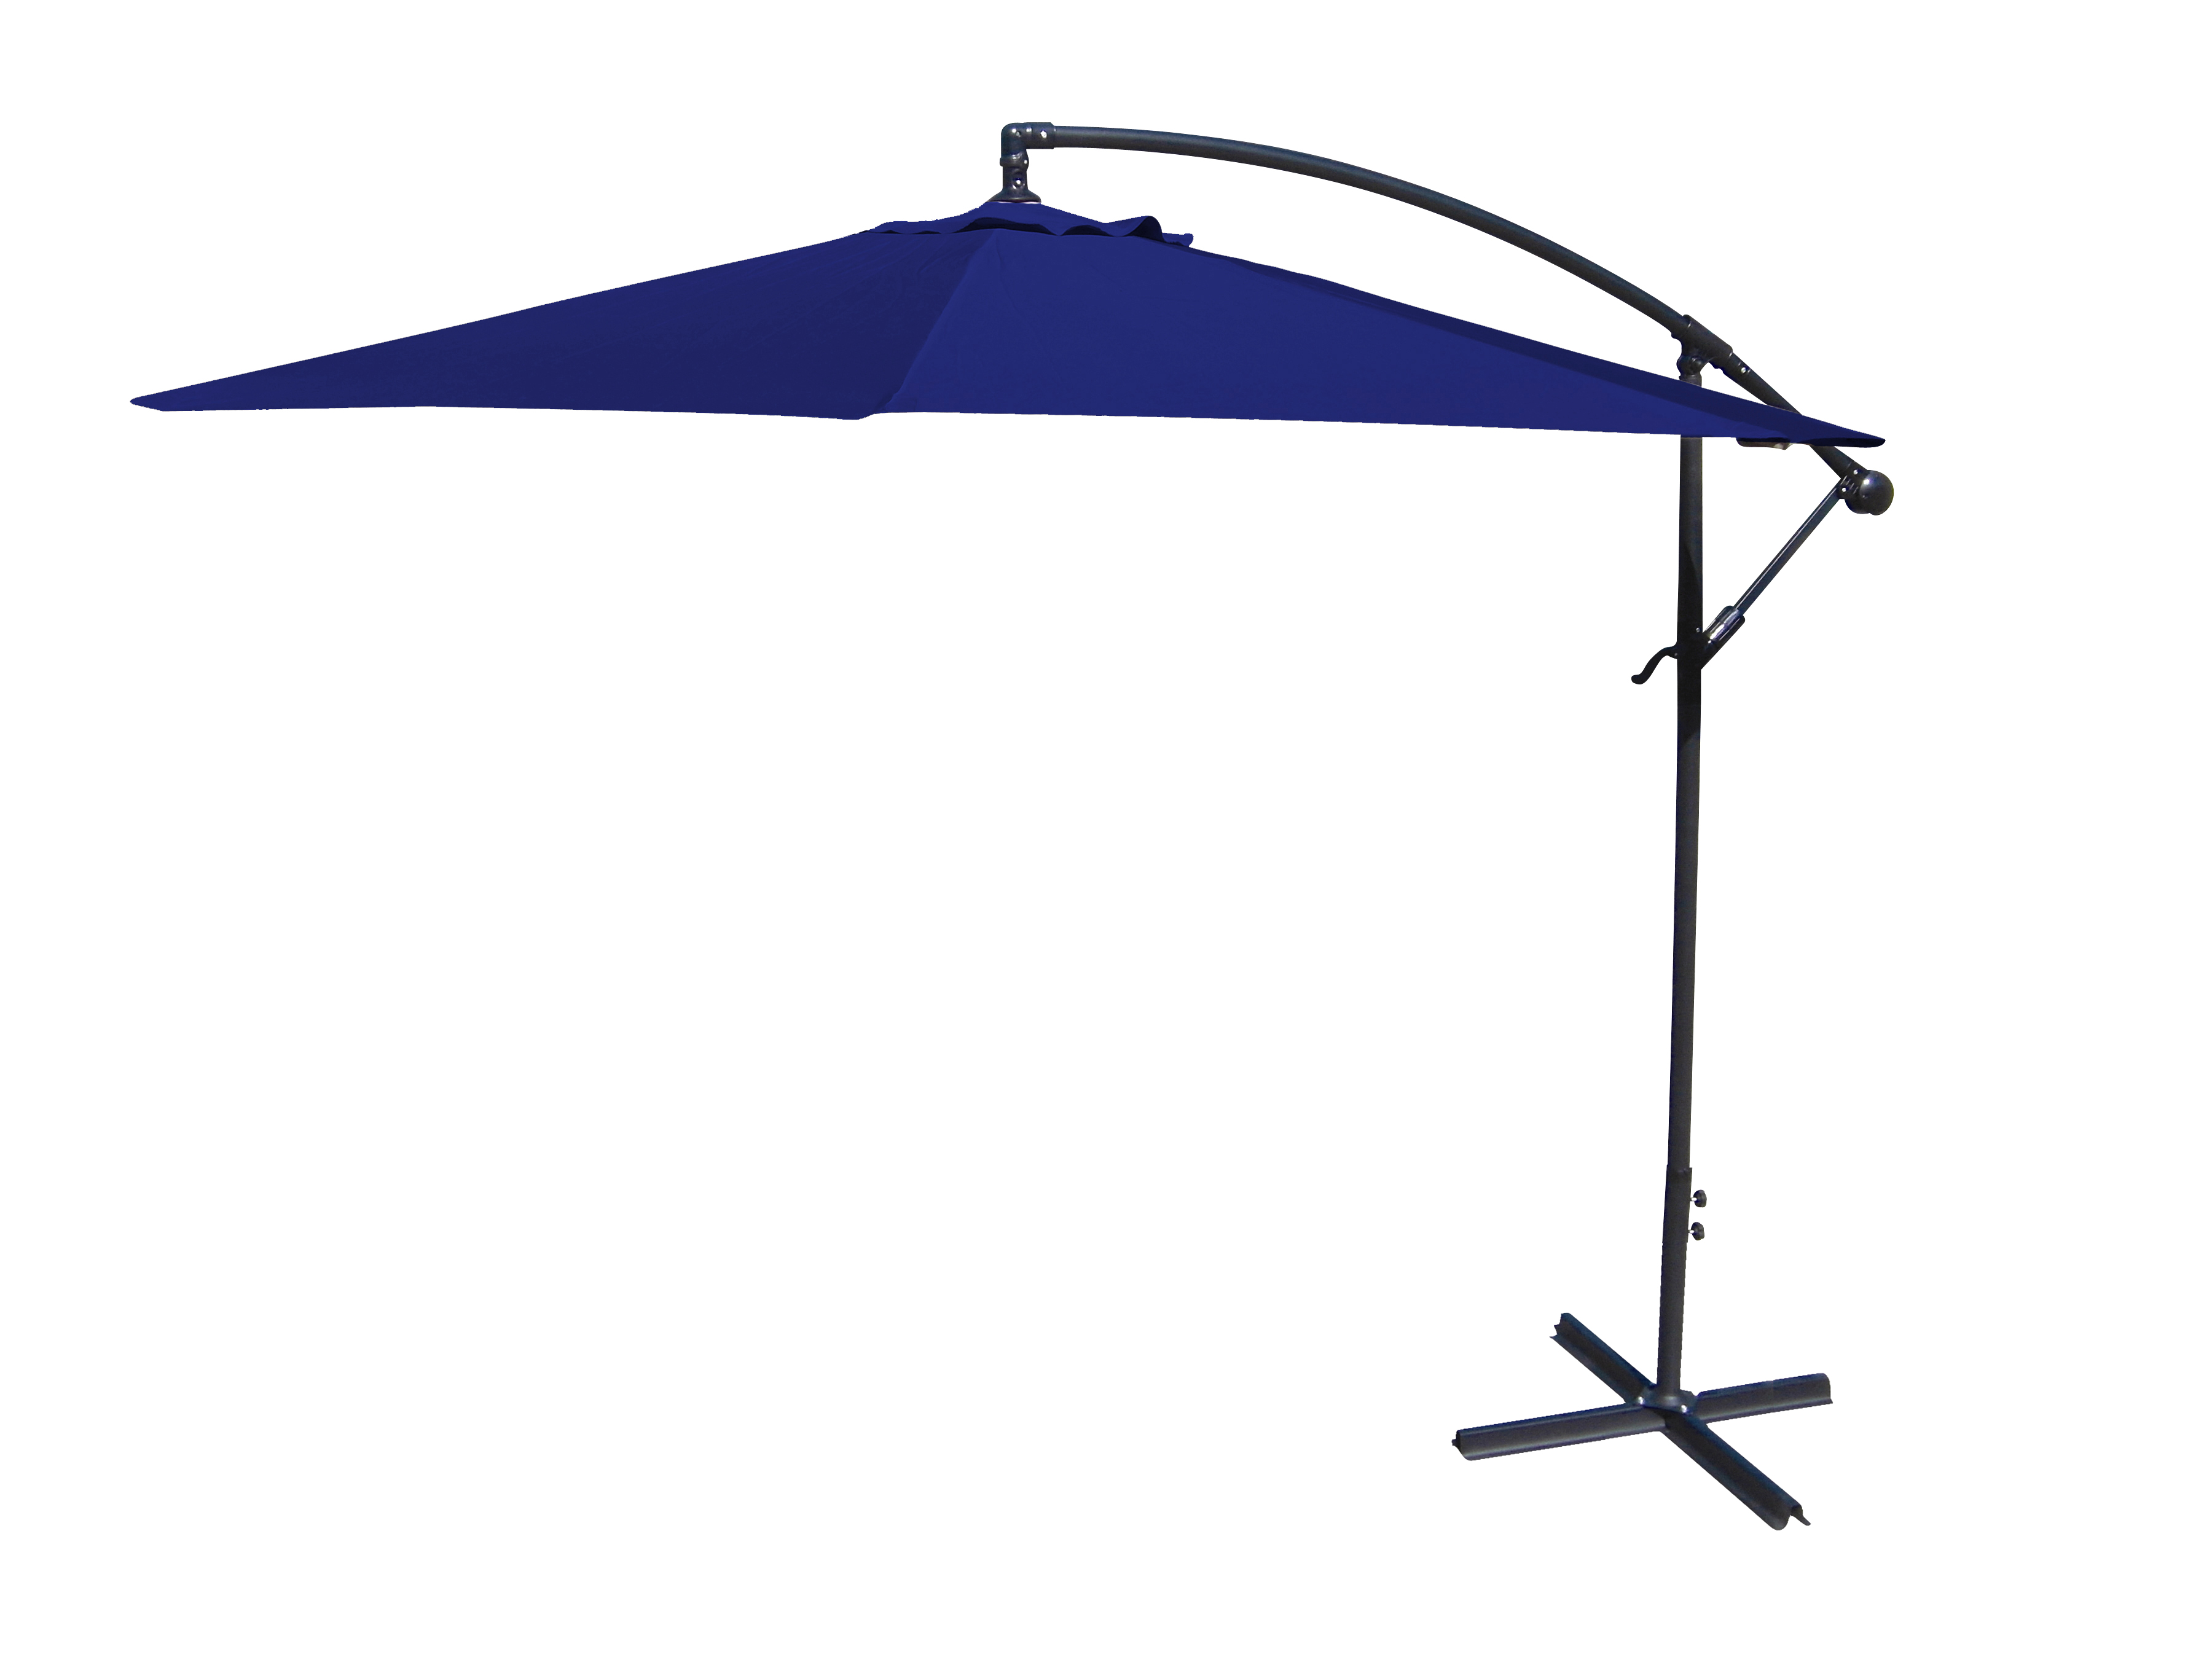 Jordan Manufacturing 10FT Offset Umbrella in Navy - image 1 of 2